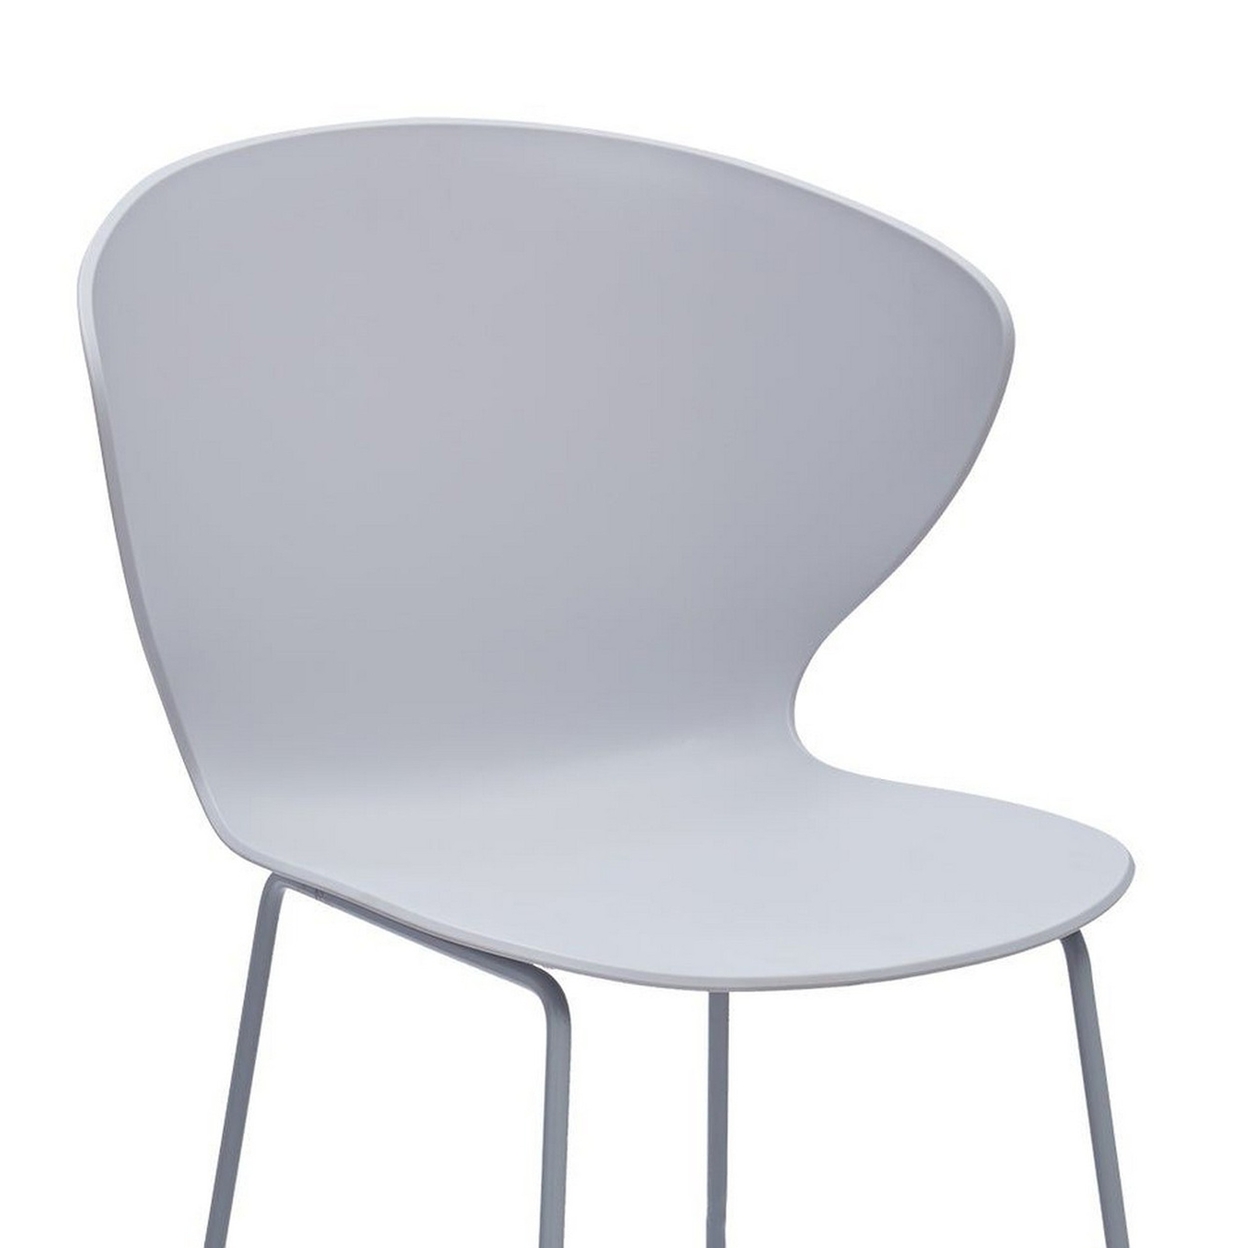 Kivi 26 Inch Set Of 2 Counter Stool Chairs, Metal Legs, Gray Polypropylene - Saltoro Sherpi